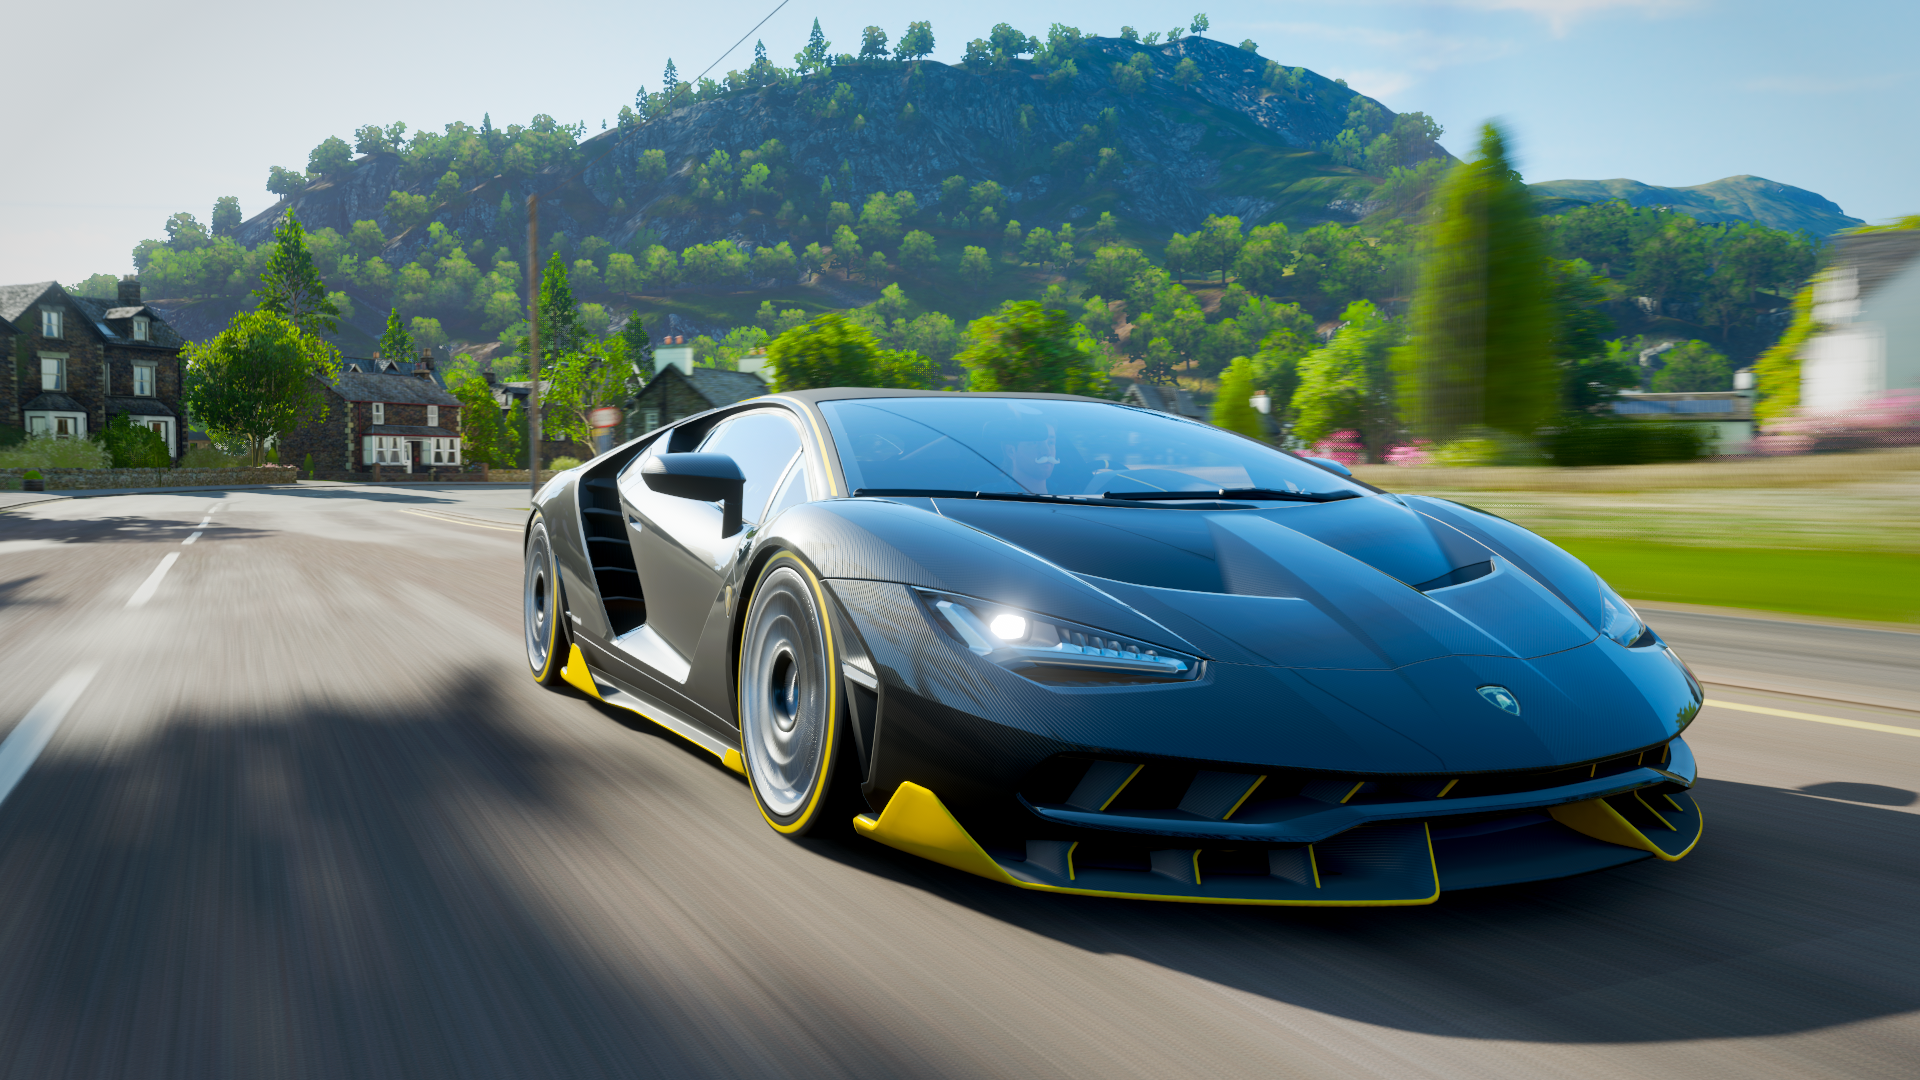 General 1920x1080 Xbox One Forza Horizon 4 video games screen shot racing car black cars vehicle